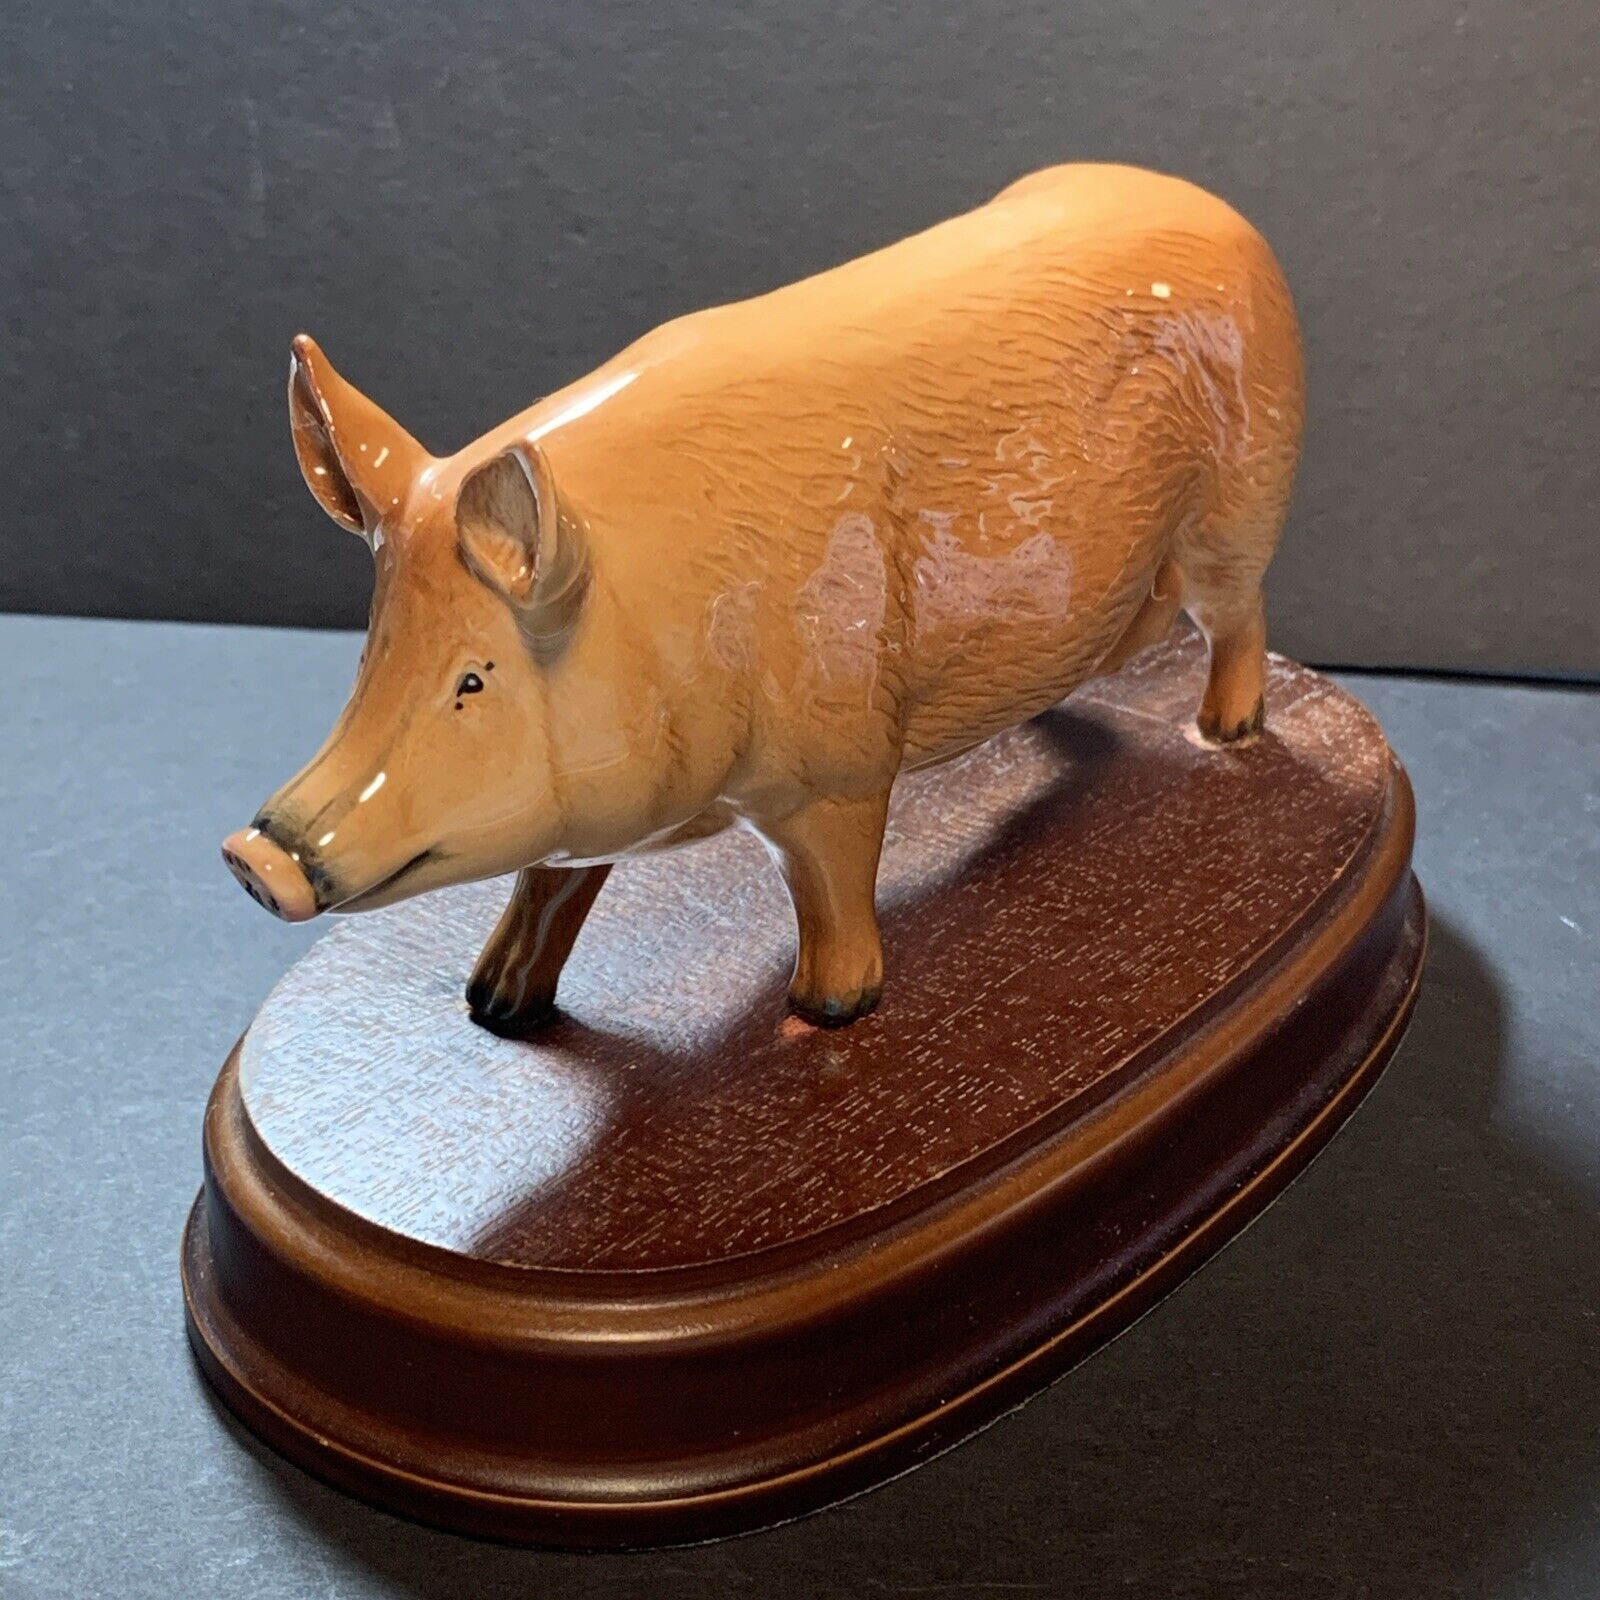 Sow Mama Pig Royal Doulton Ceramic Figurine On Wood Platform Caramel Brown Color